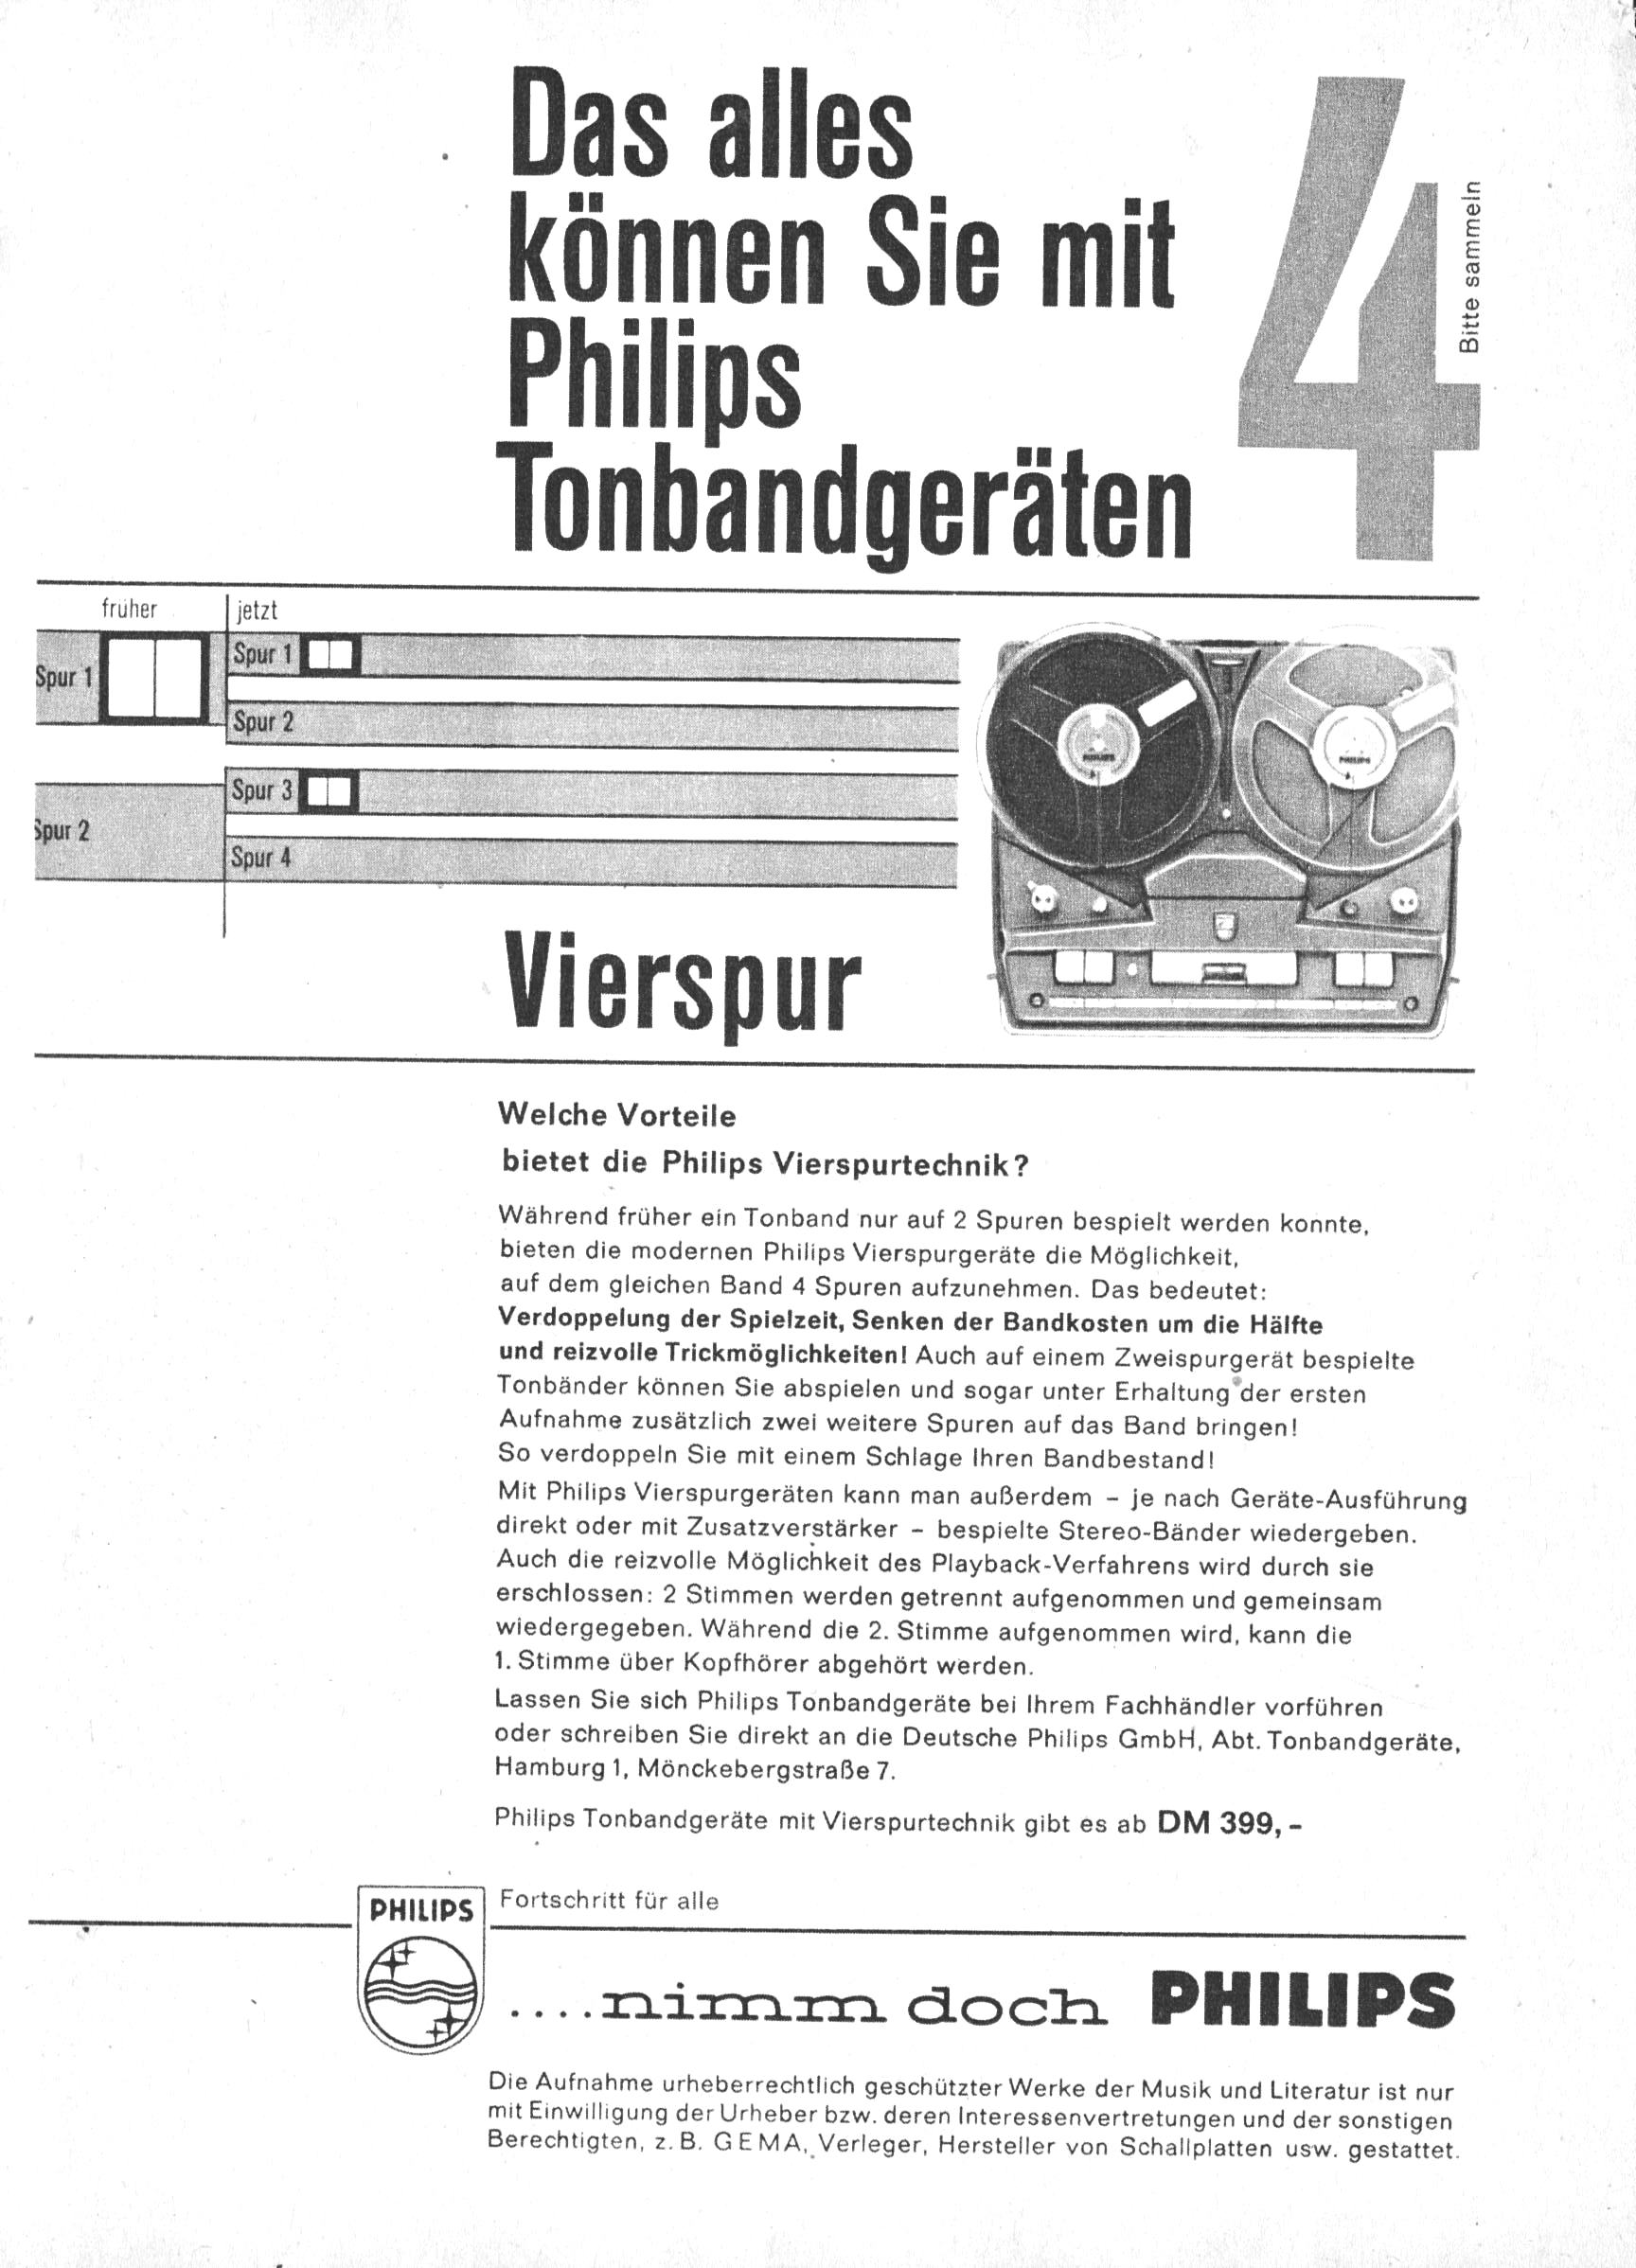 Philips 1960 H1.jpg